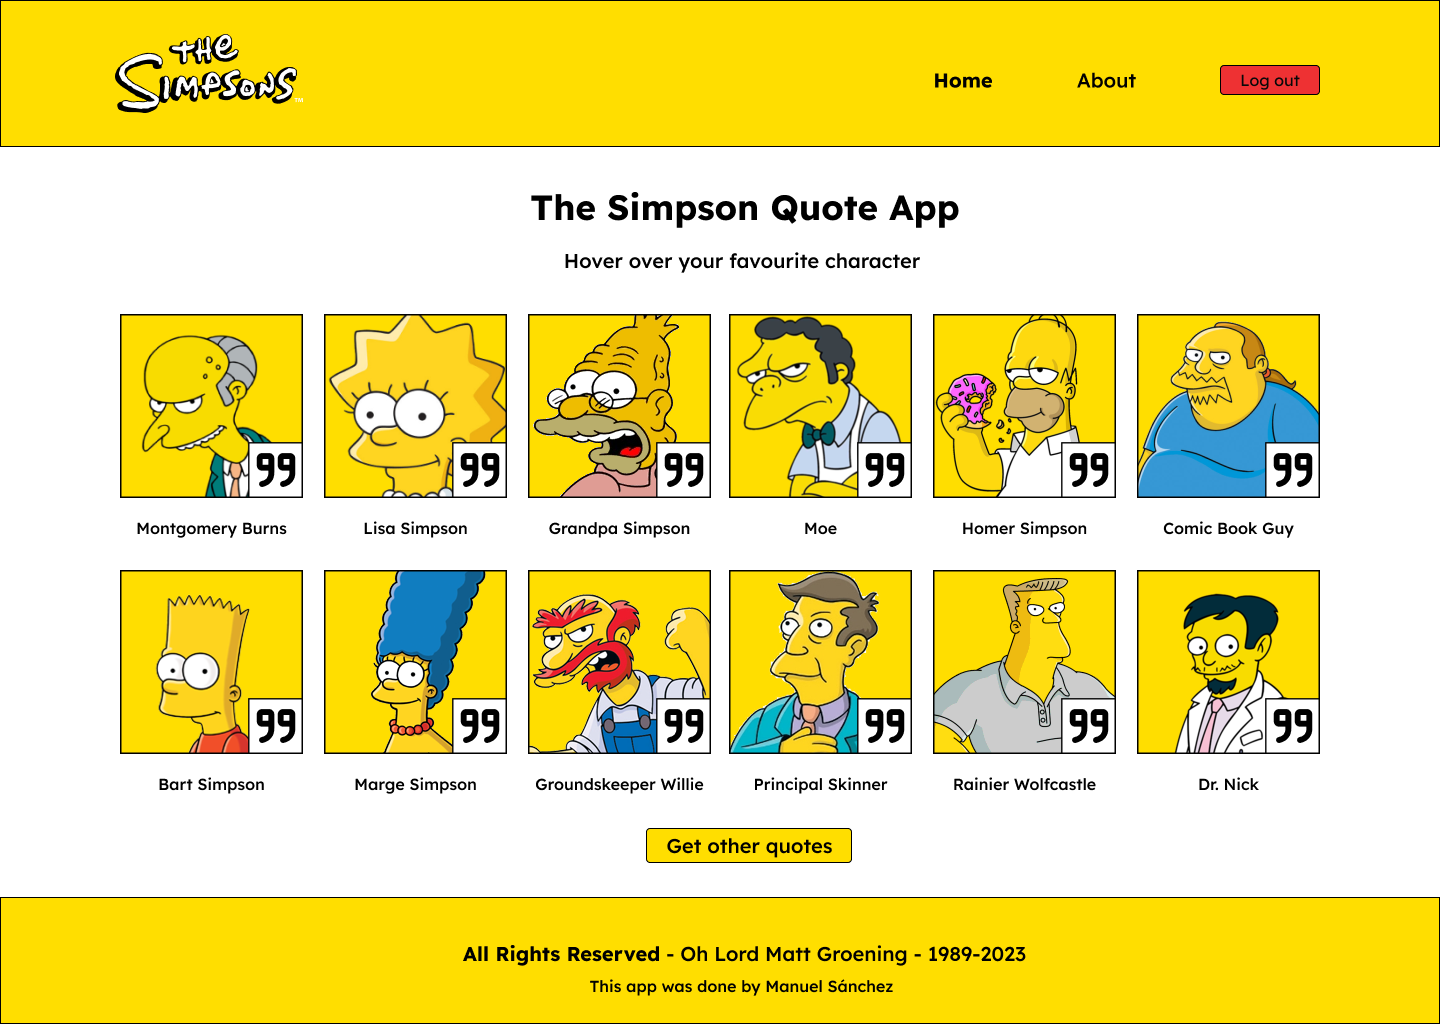 The Simpsons Quote App